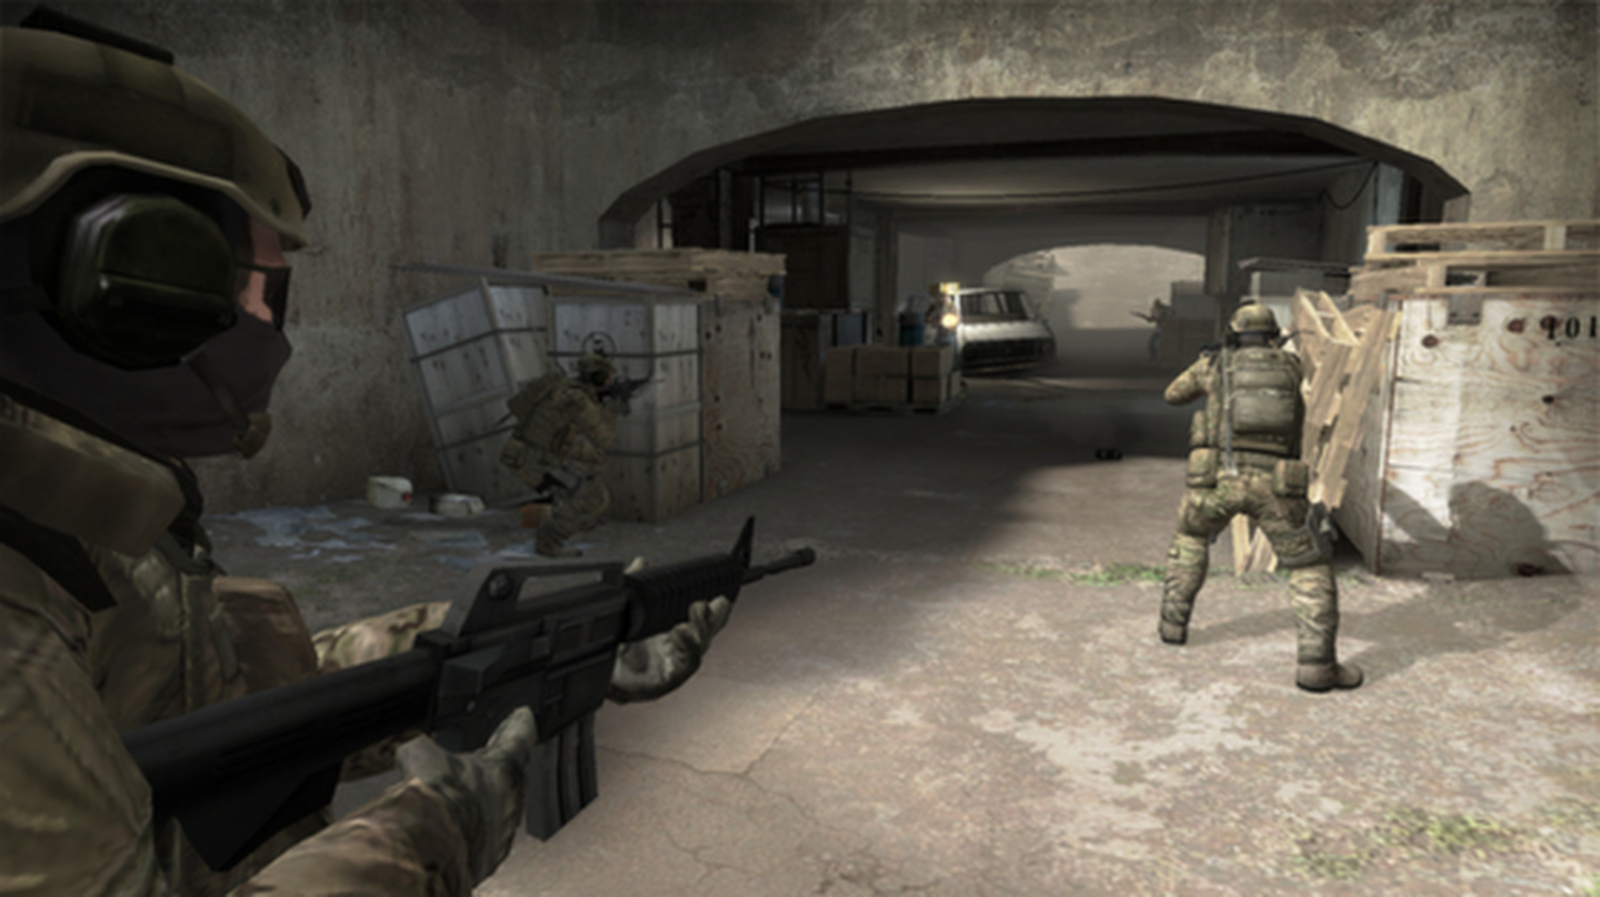 Counter-Strike: Global Offensive Arrives for Mac on Steam - MacRumors